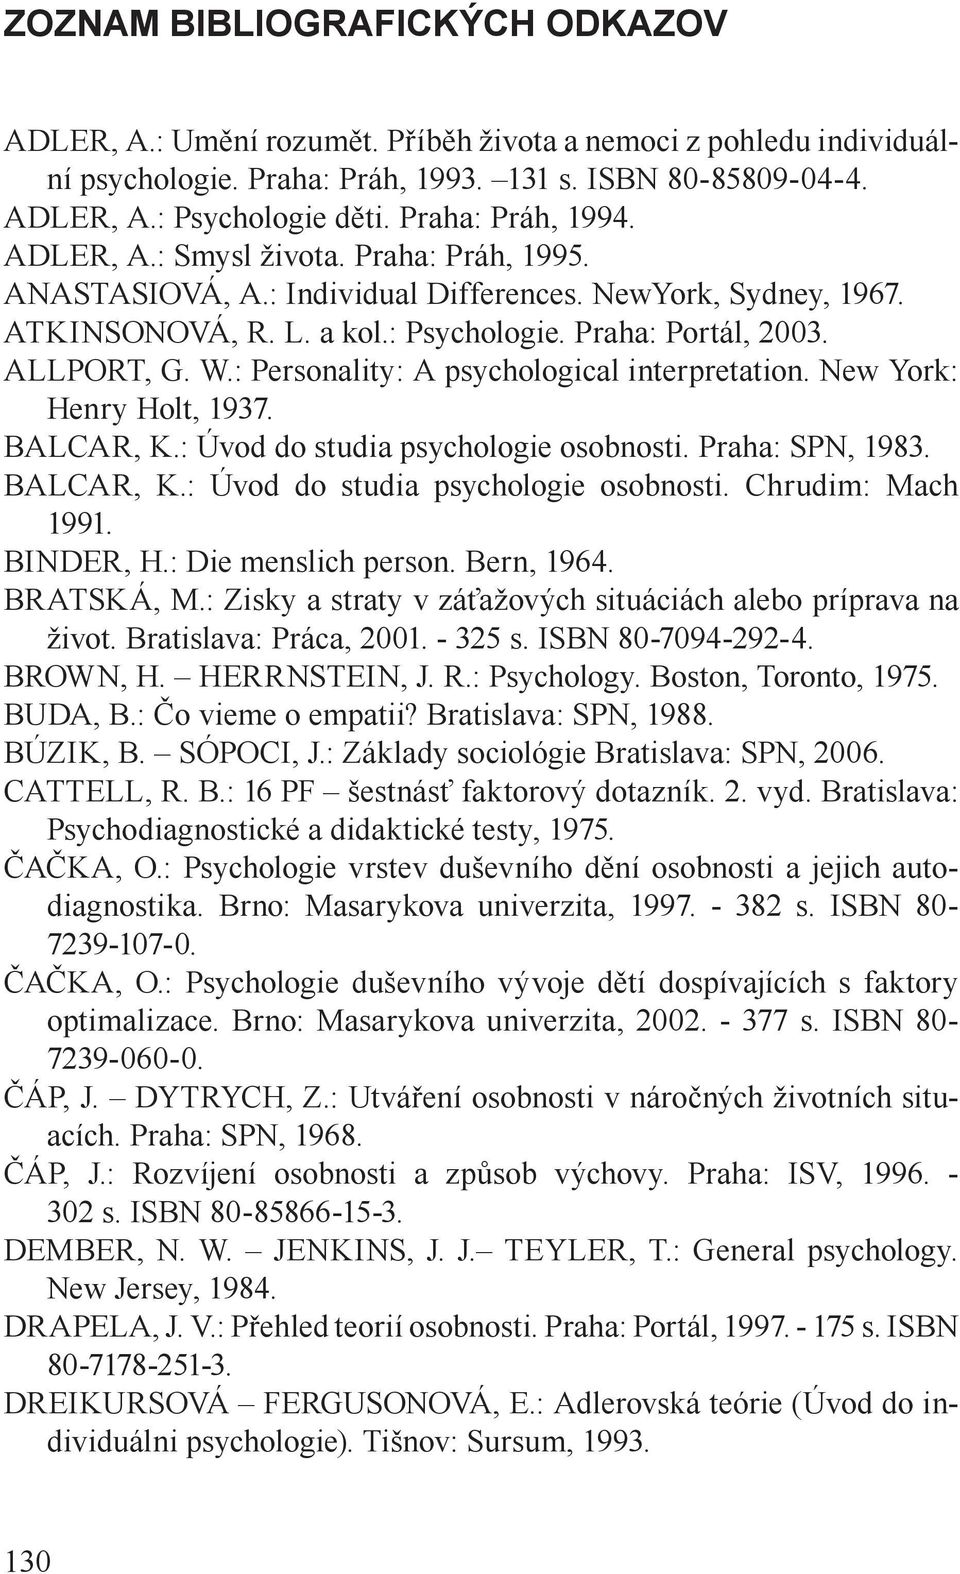 W.: Personality: A psychological interpretation. New York: Henry Holt, 1937. BALCAR, K.: Úvod do studia psychologie osobnosti. Praha: SPN, 1983. BALCAR, K.: Úvod do studia psychologie osobnosti. Chrudim: Mach 1991.